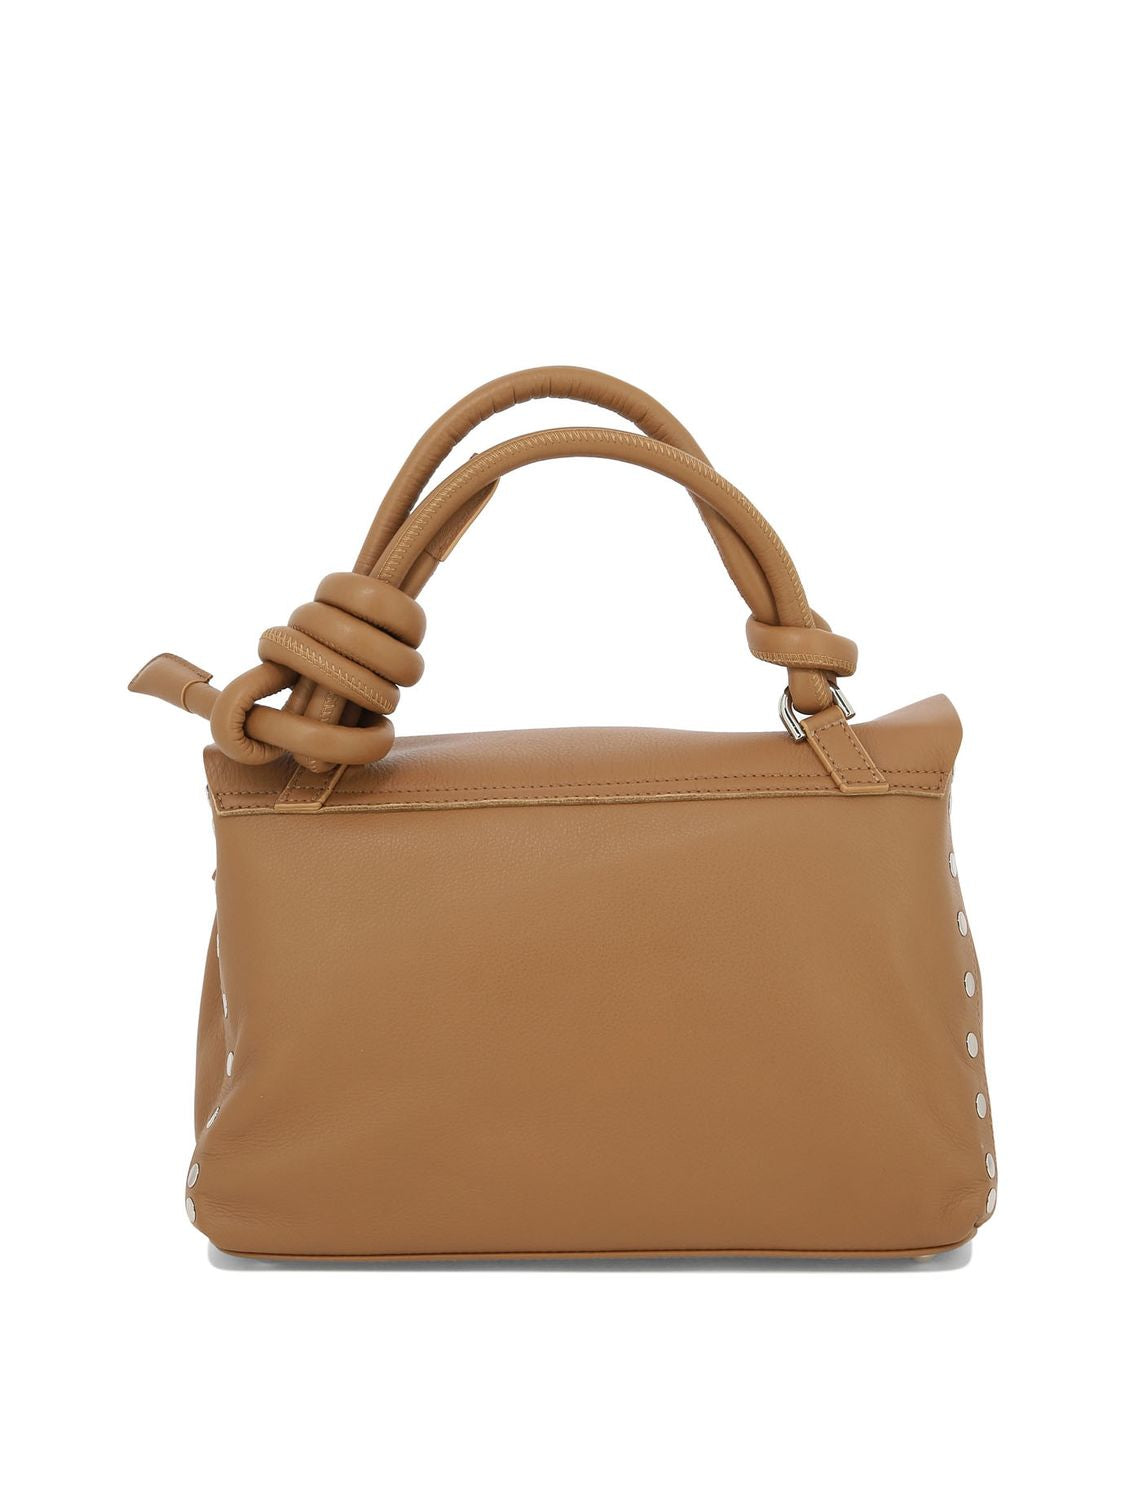 ZANELLATO Tan Leather Postman Knot Handbag for Women